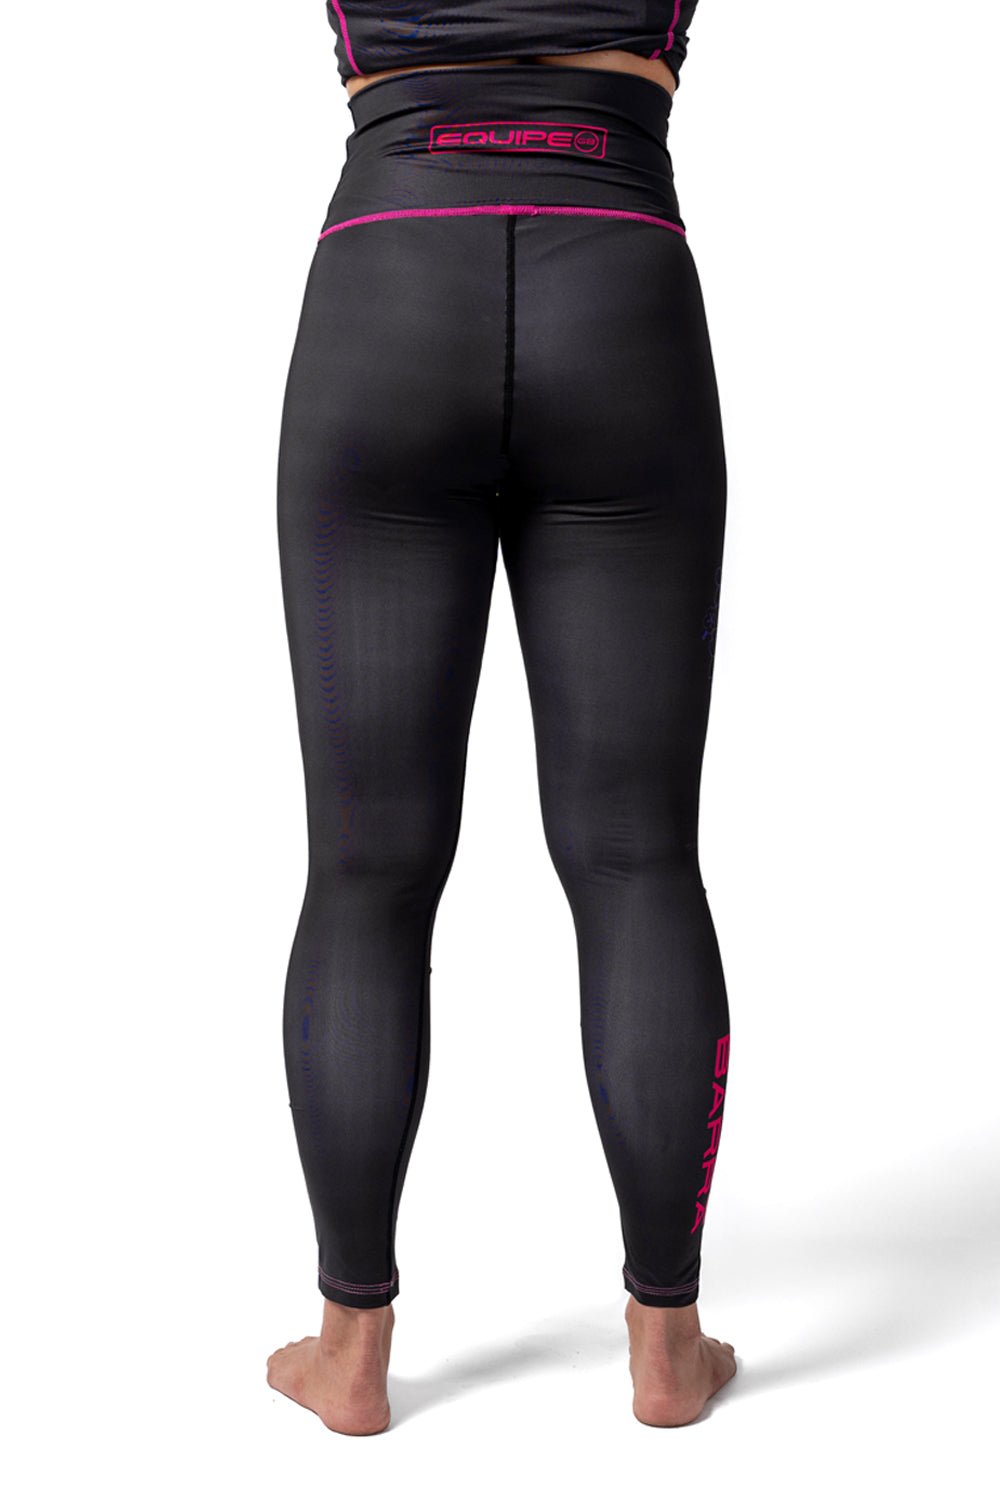 GB Sakura Womens Compression Pants - Black